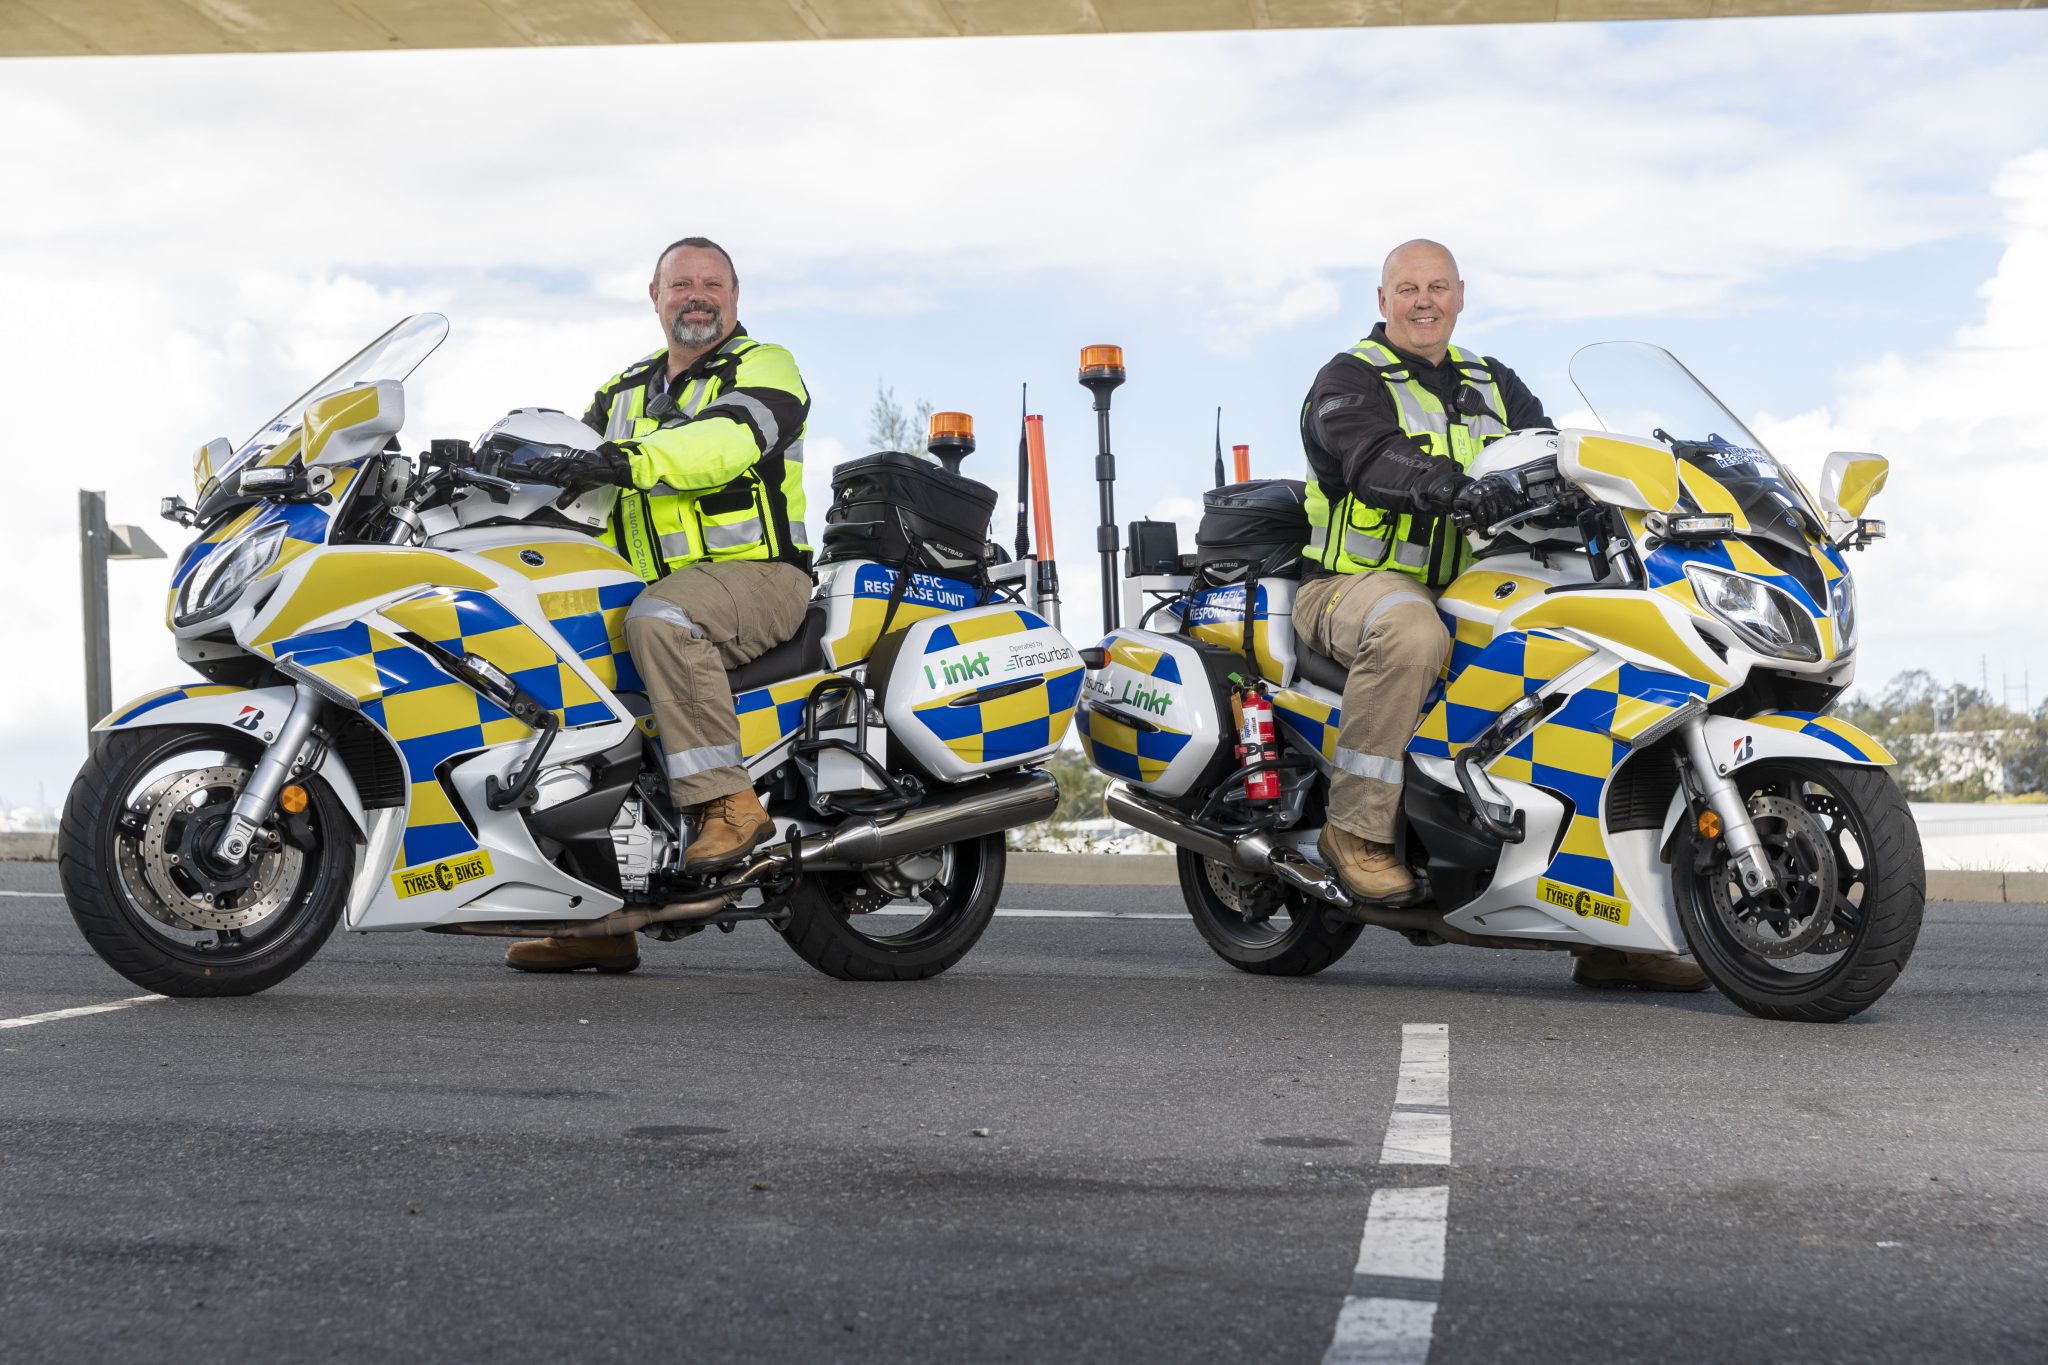 Gateway Motorway Services – Australia’s First Motorcycle Traffic Response Unit